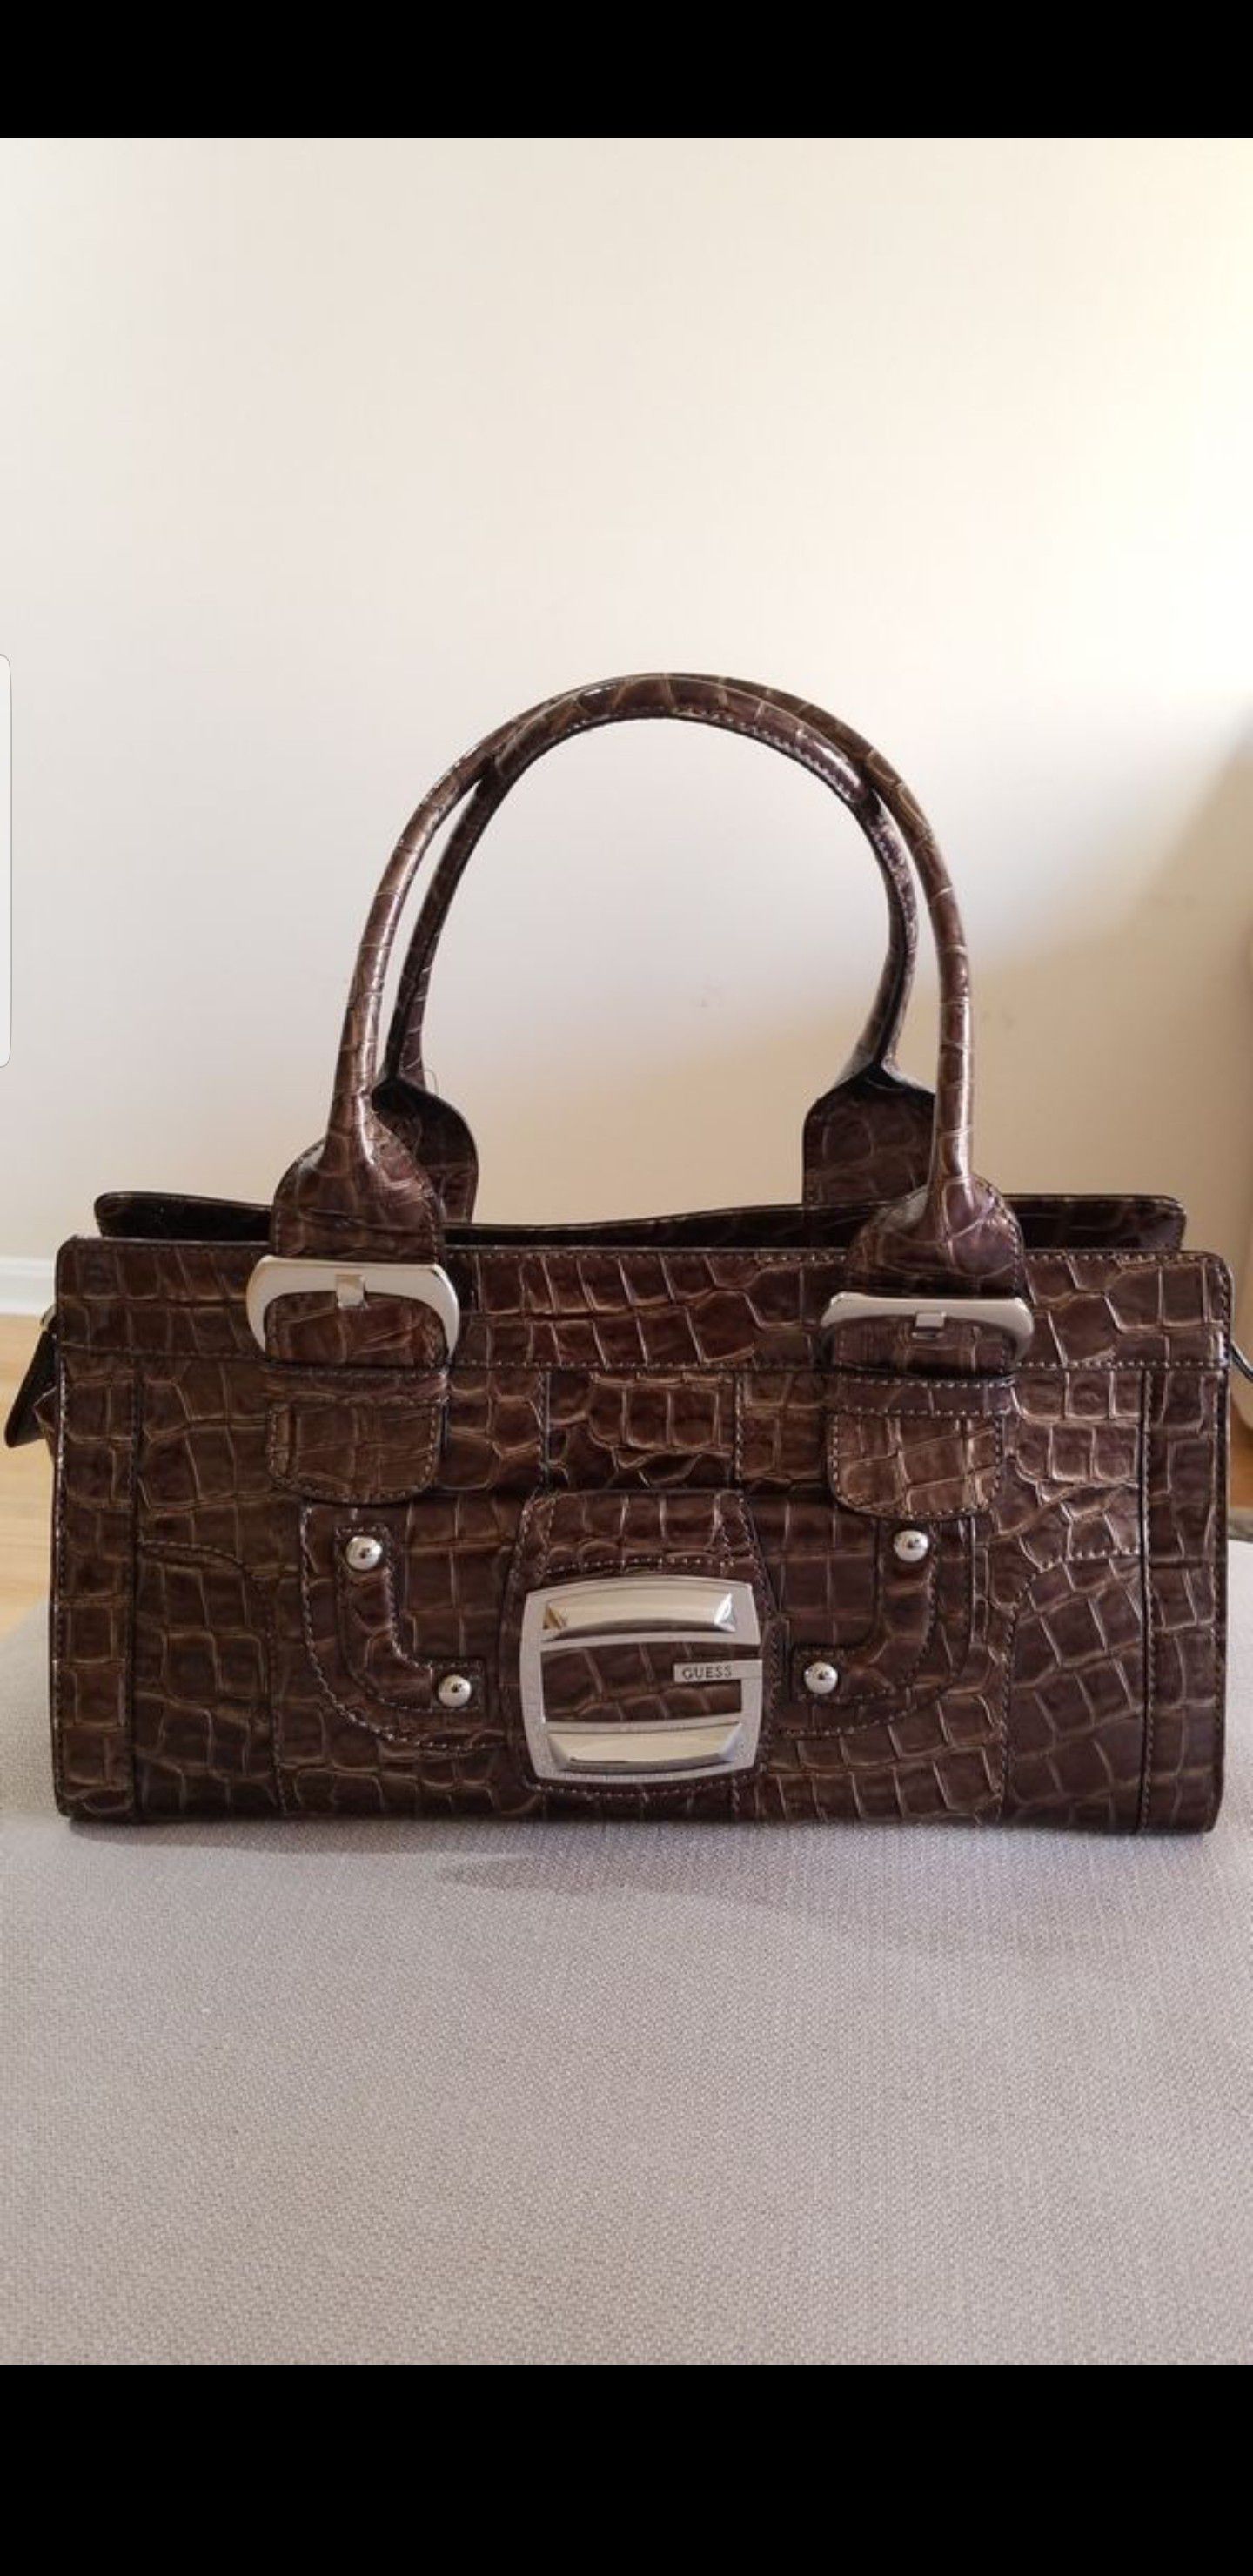 Guess leather brown handbag